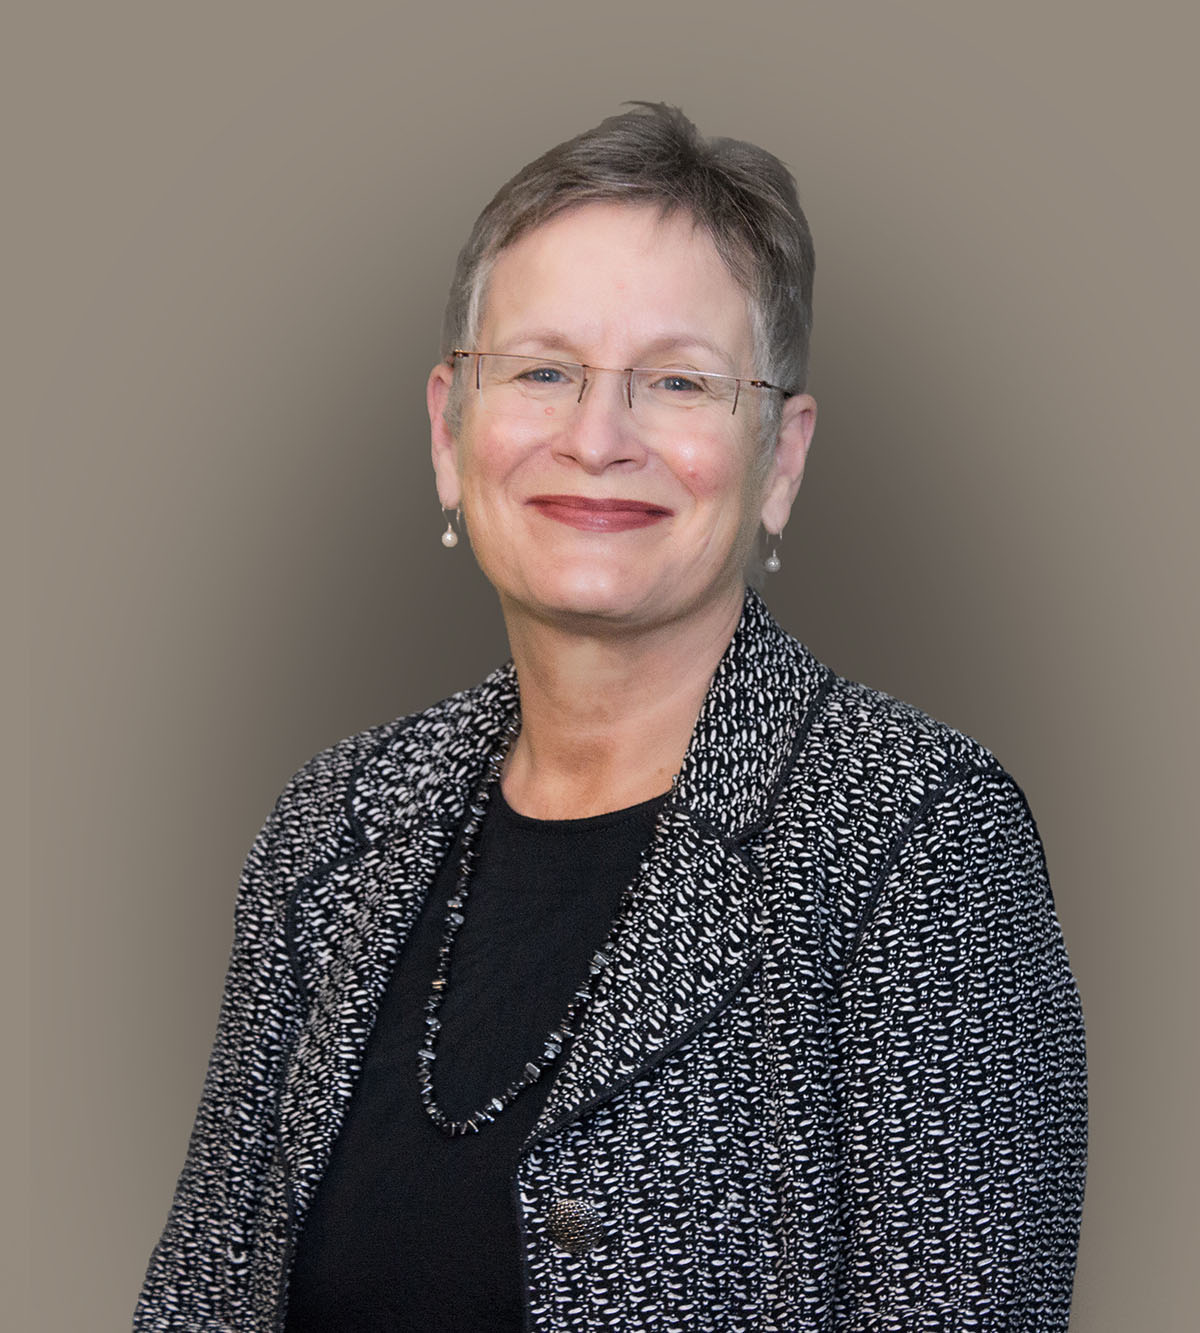 Fiona Hunter - designated Trust and Estate Attorney